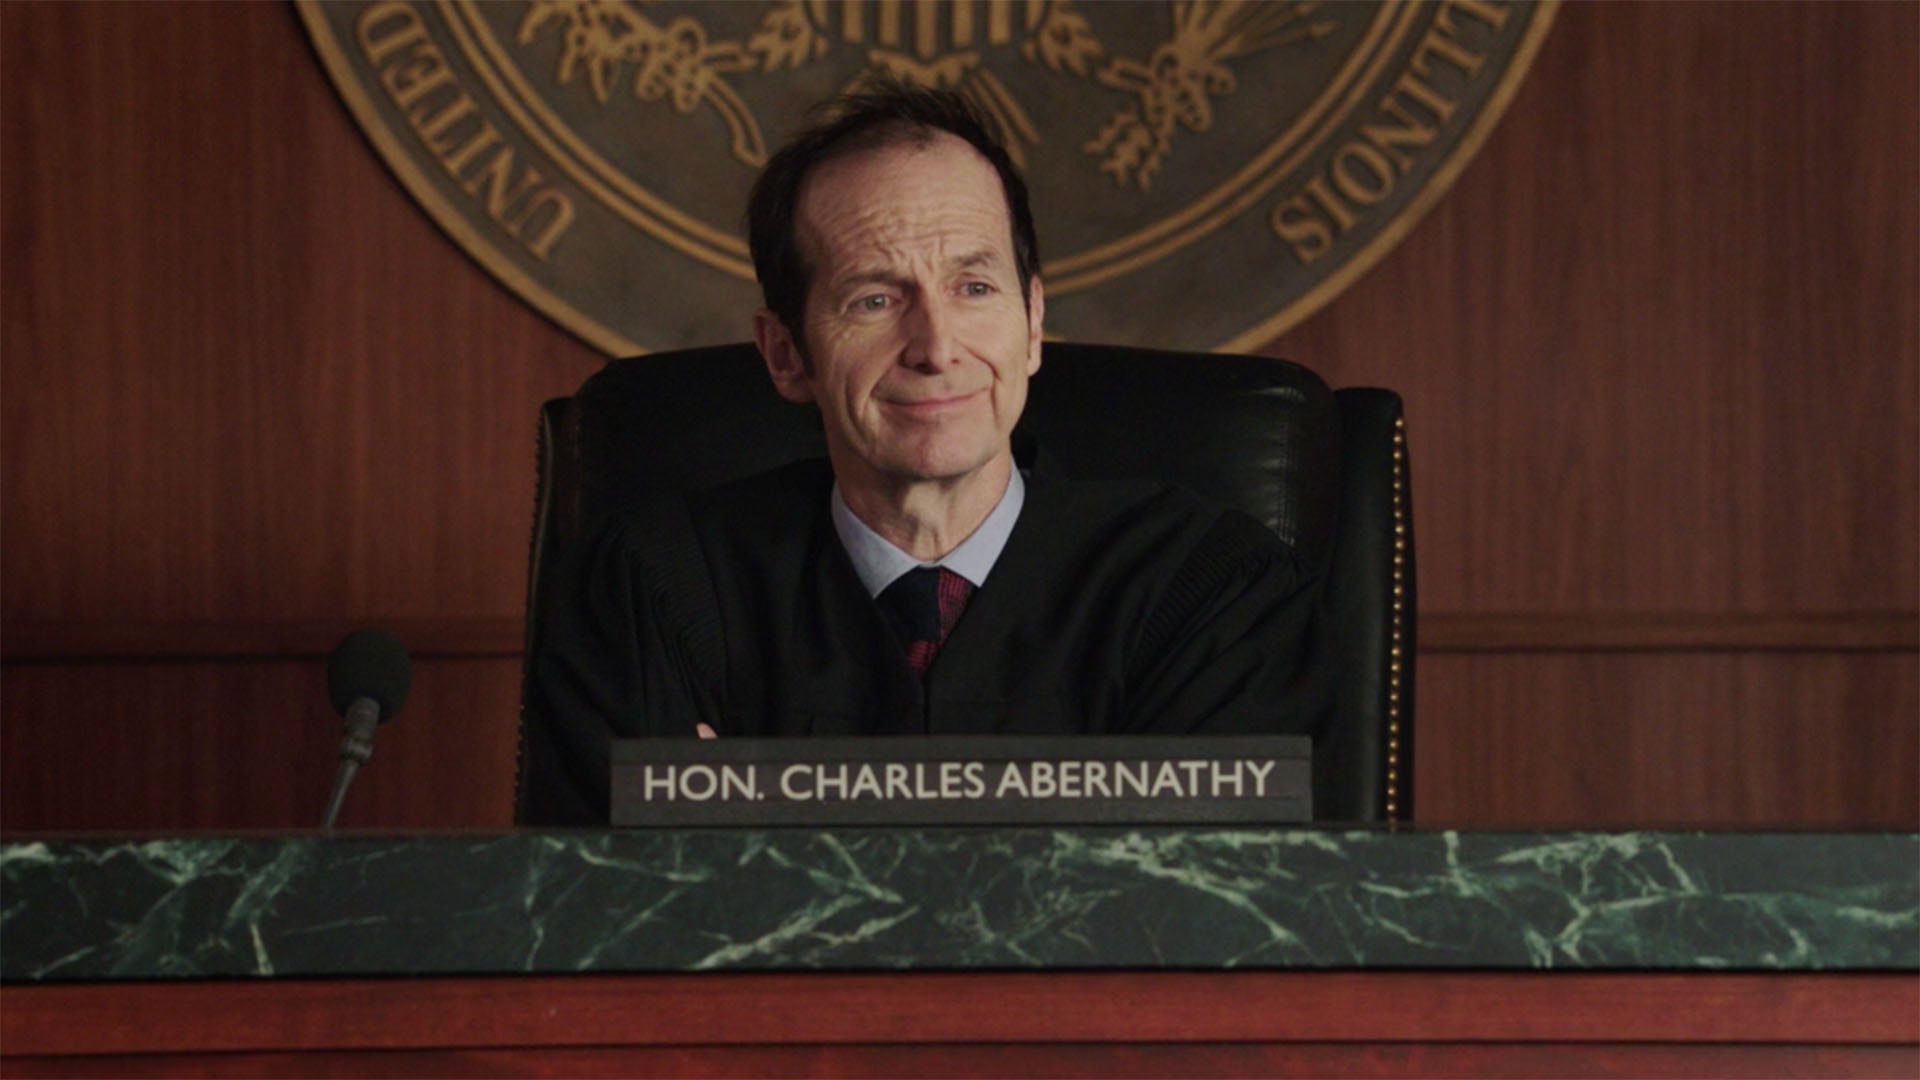 Denis O'Hare as Judge Charles Abernathy